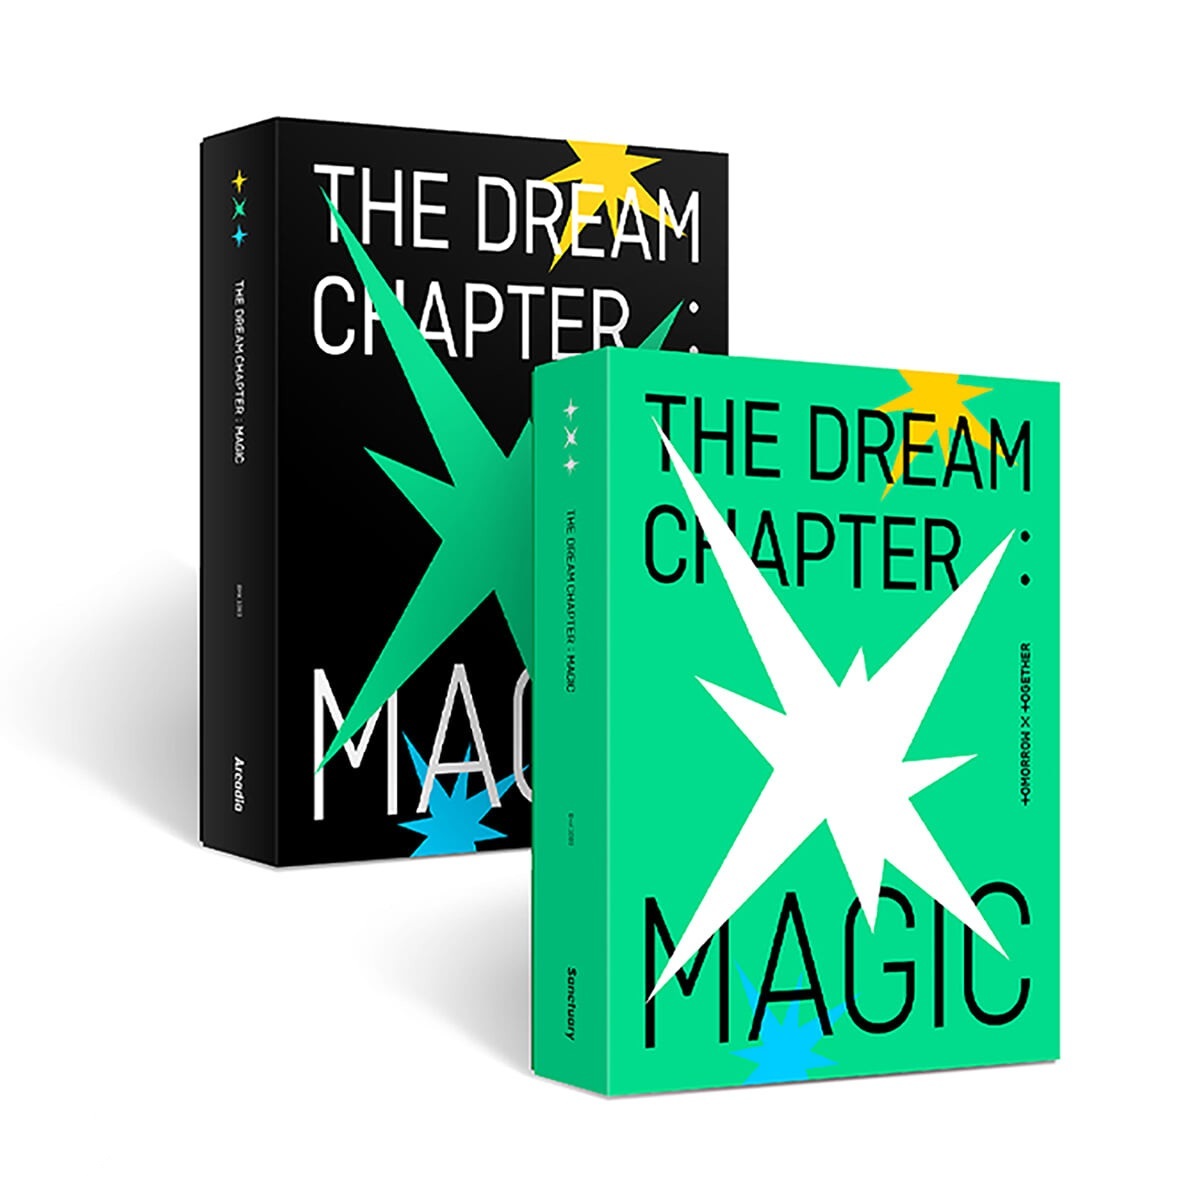 Full txt. The Dream Chapter: Magic альбом. Альбом txt the Dream Chapter: Magic. Альбом тхт the Dream Chapter Star. Альбом тхт the Dream Chapter Magic.